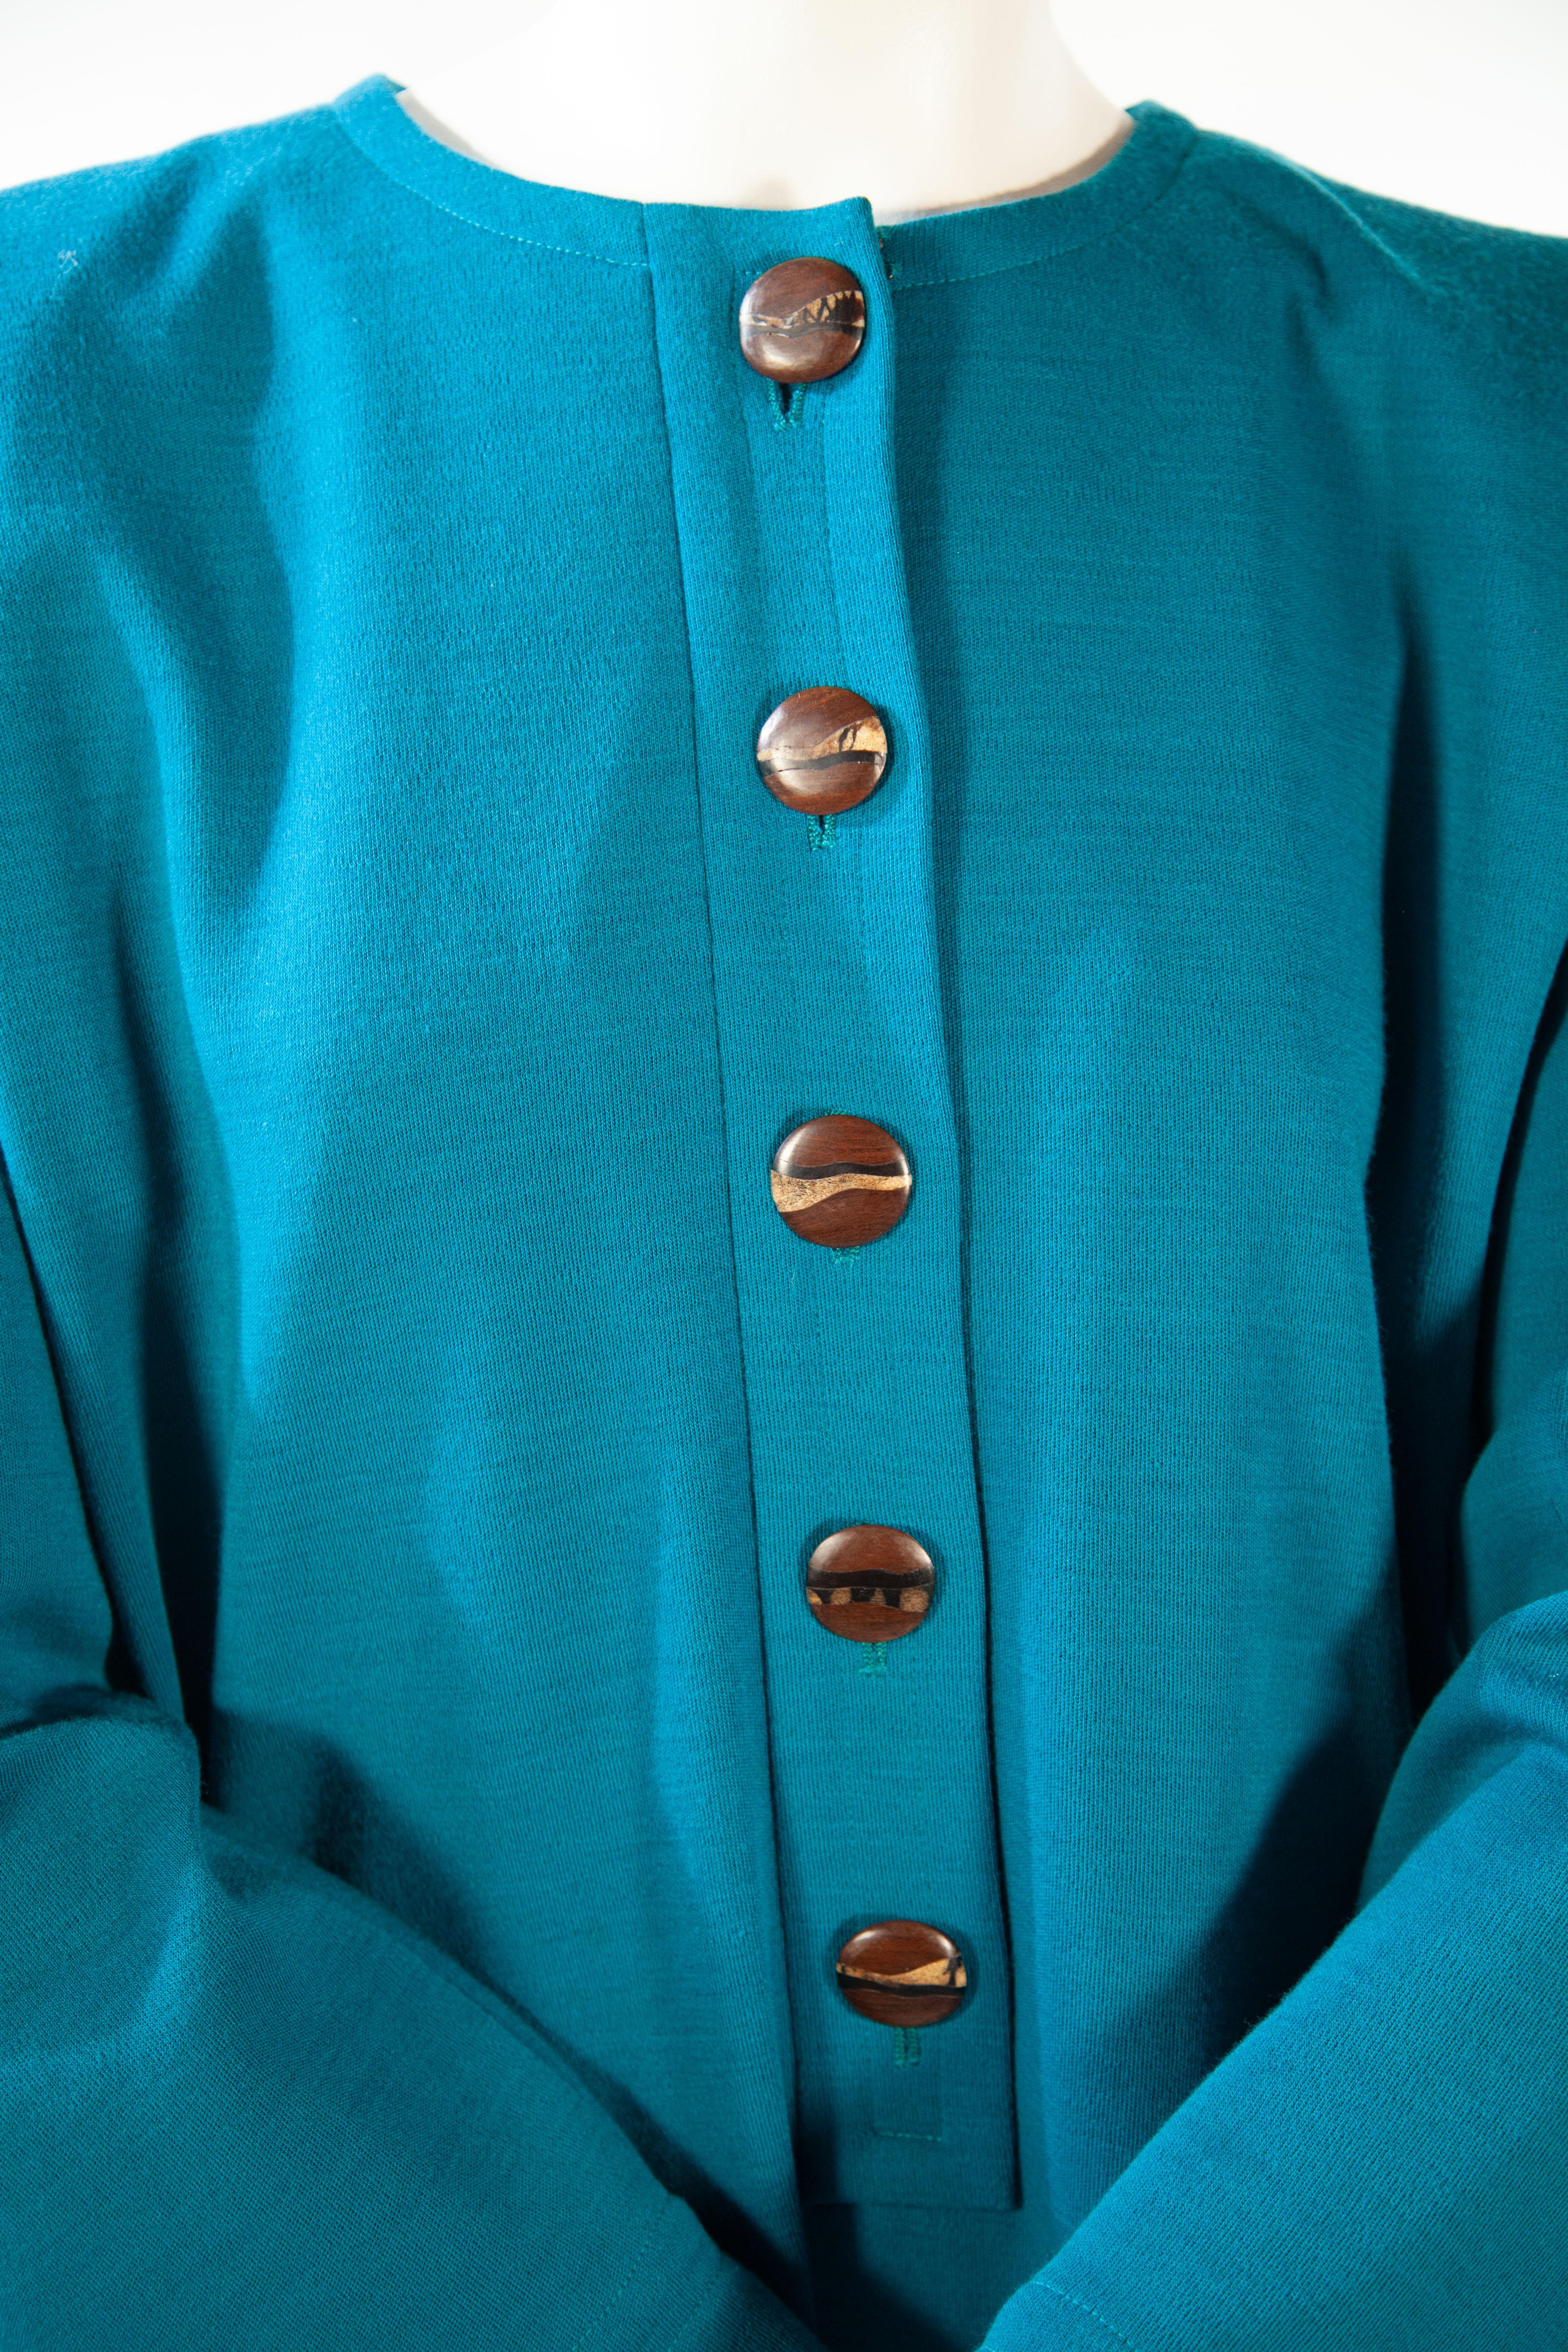 Yves Saint Laurent Rive Gauche Turquoise Smock Dress  1